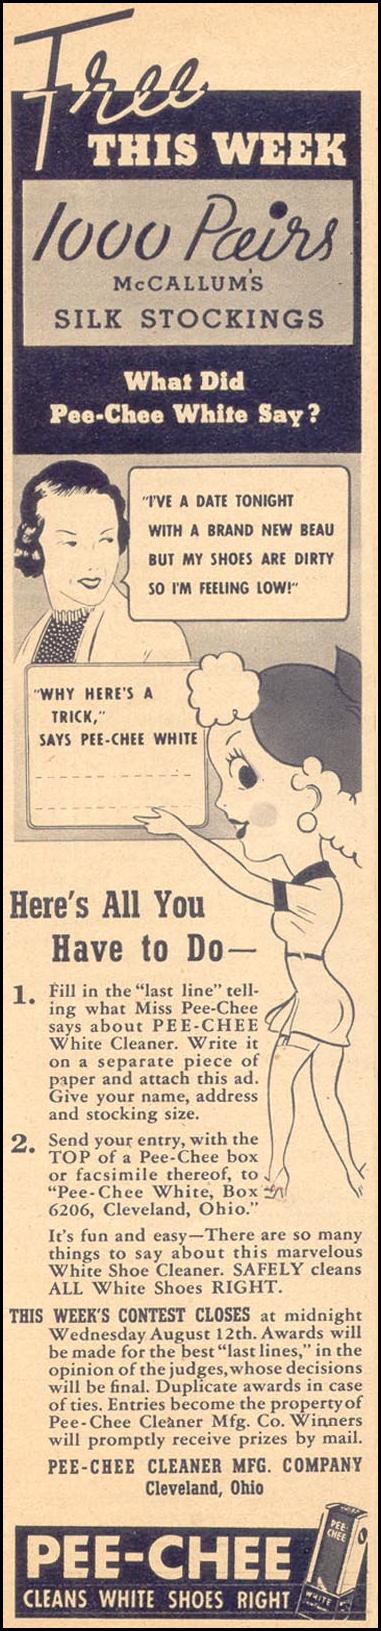 PEE-CHEE SHOE CLEANER
LIBERTY
08/08/1936
p. 52